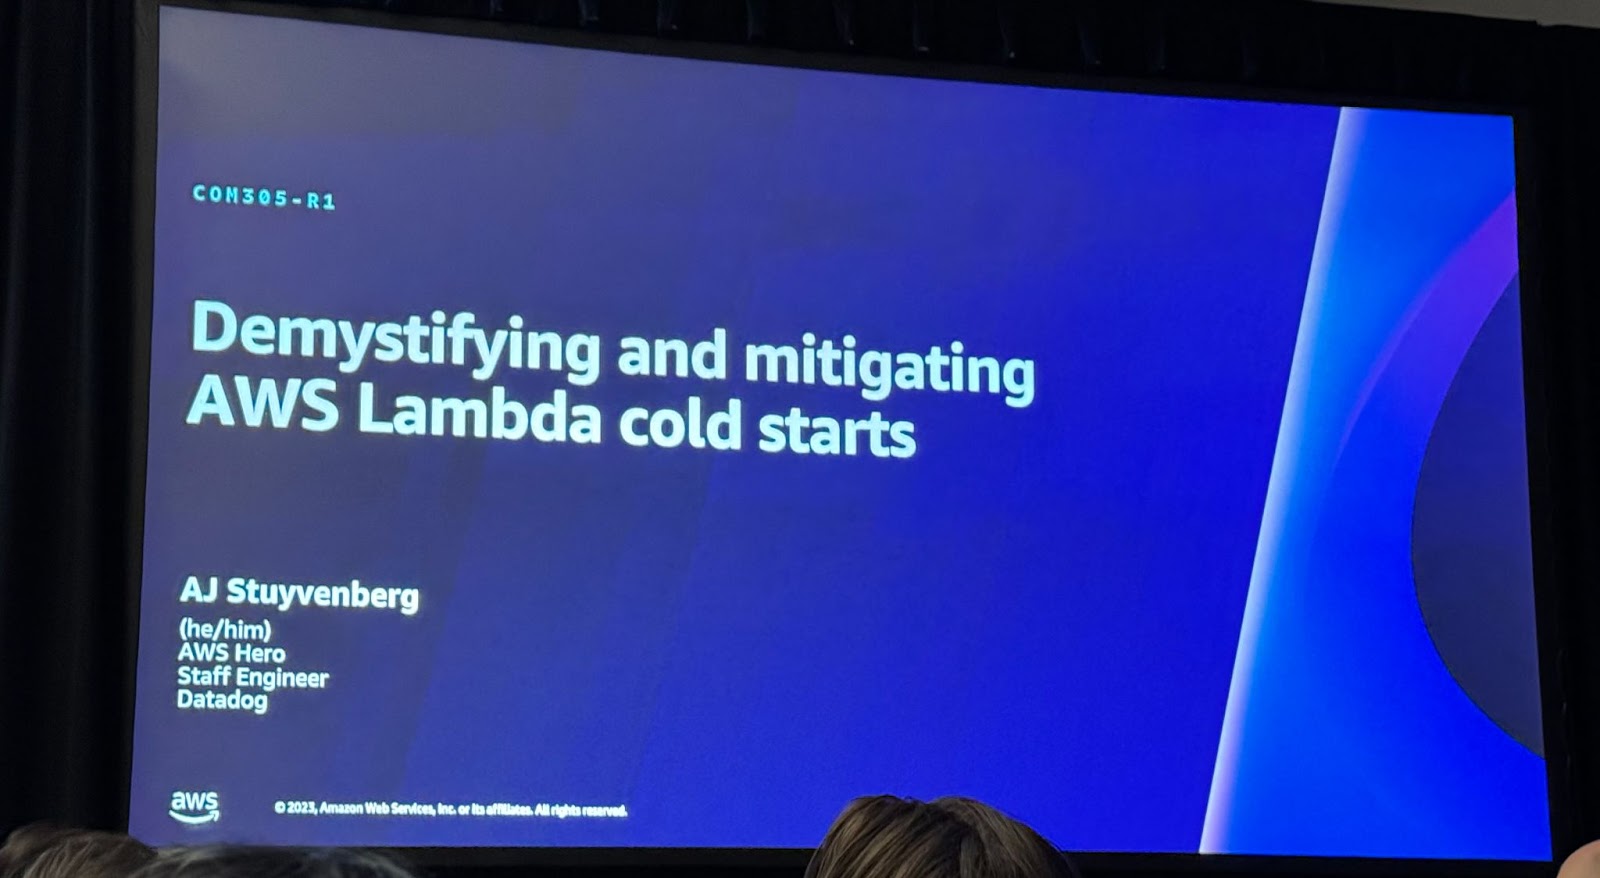 Demystifying and mitigating AWS Lambda cold starts